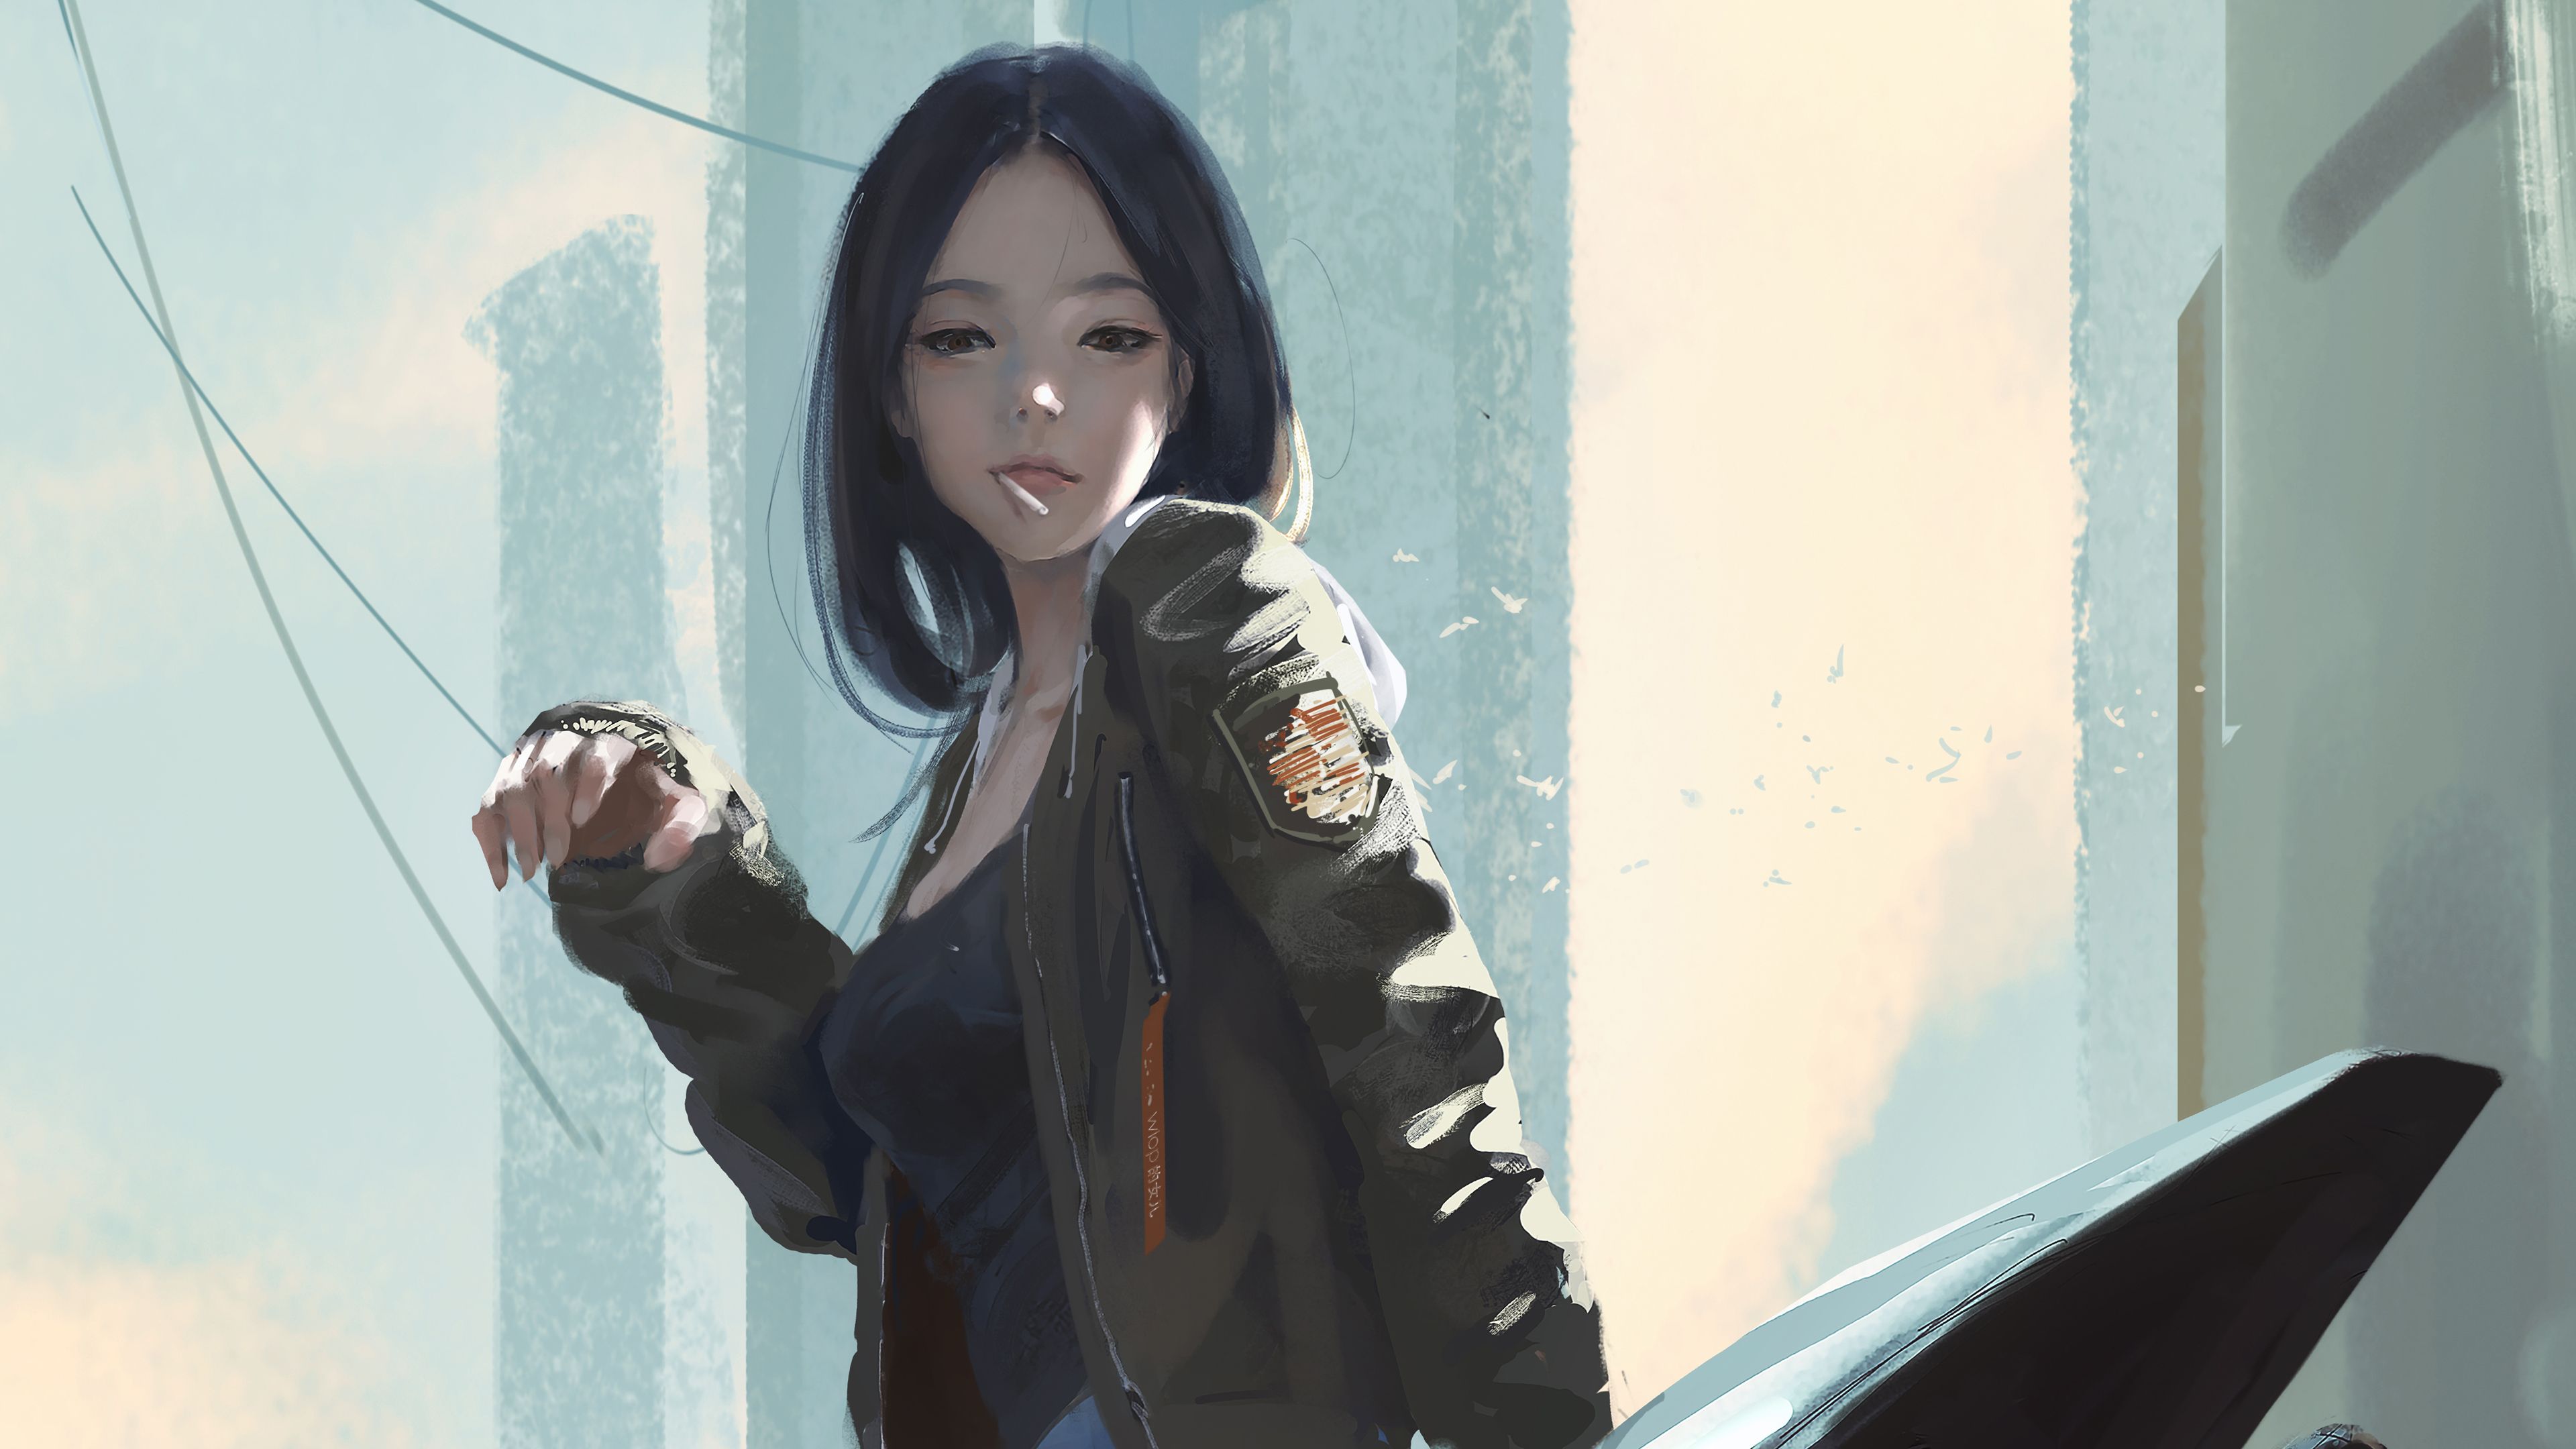 Urban Girl Smoking Cigarette, HD Anime, 4k Wallpaper, Image